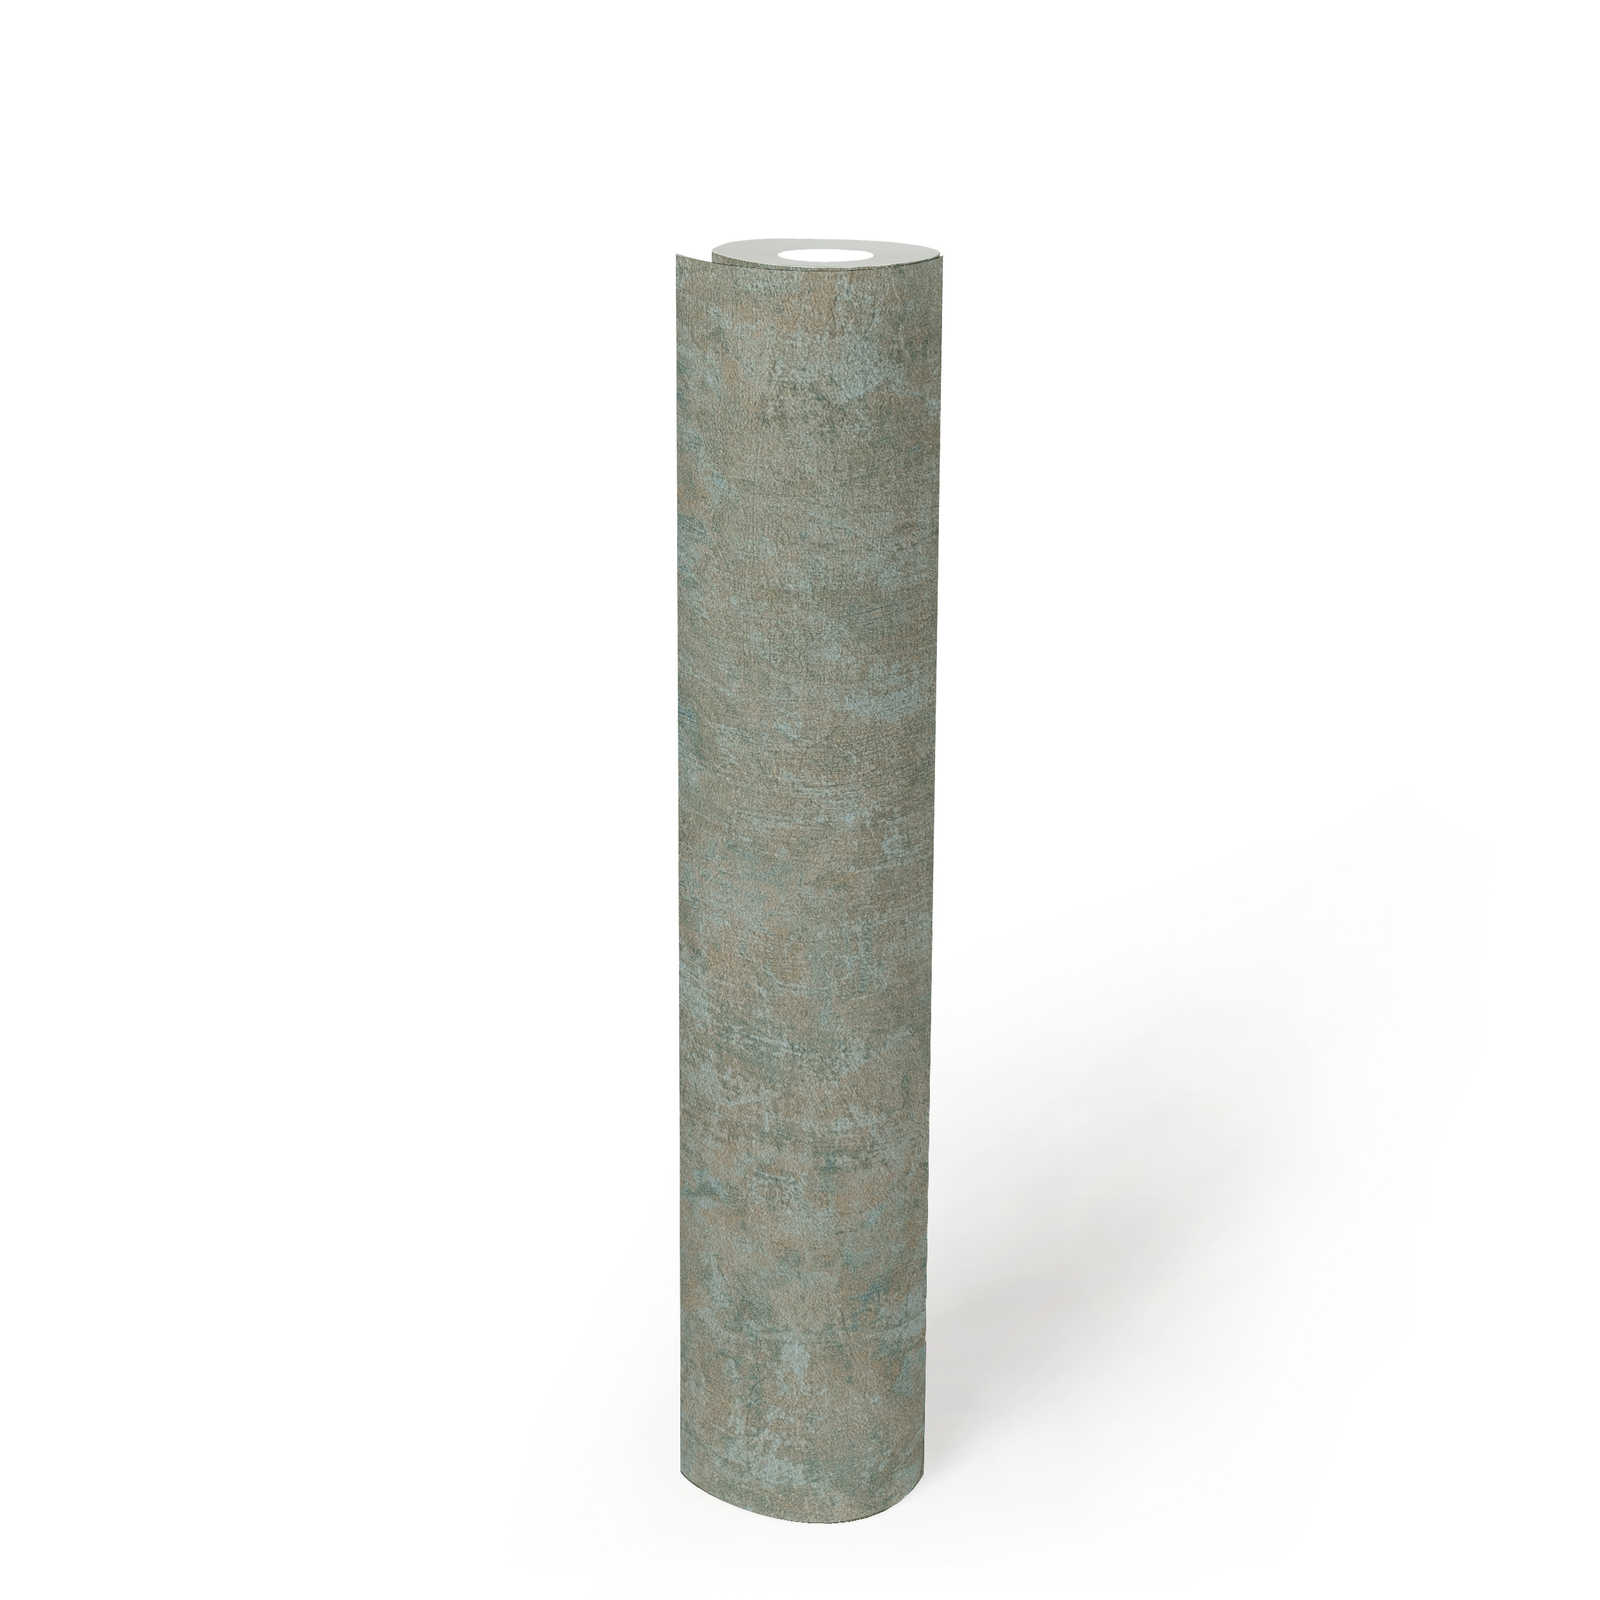             PVC-freie Vliestapete mit Strukturoptik – Grün, Blau
        